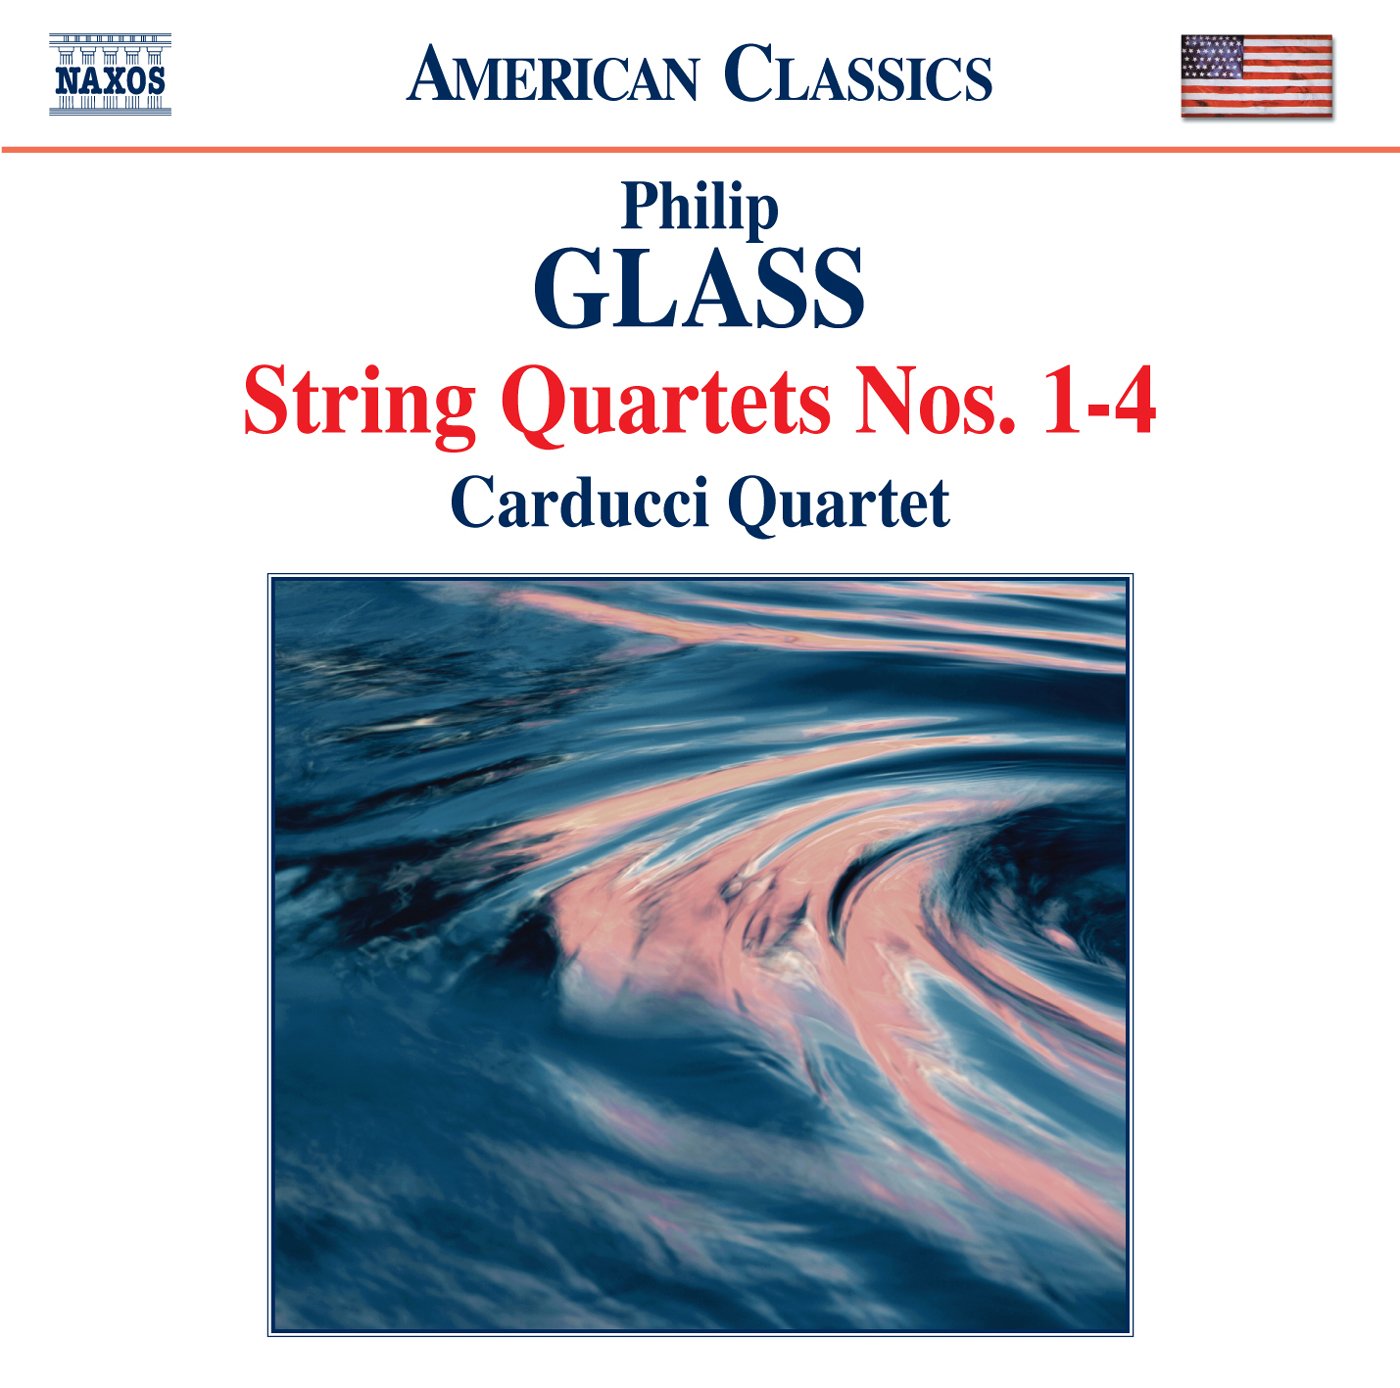 Glass: String Quartets Nos. 1-4 — Philip Glass | Last.fm